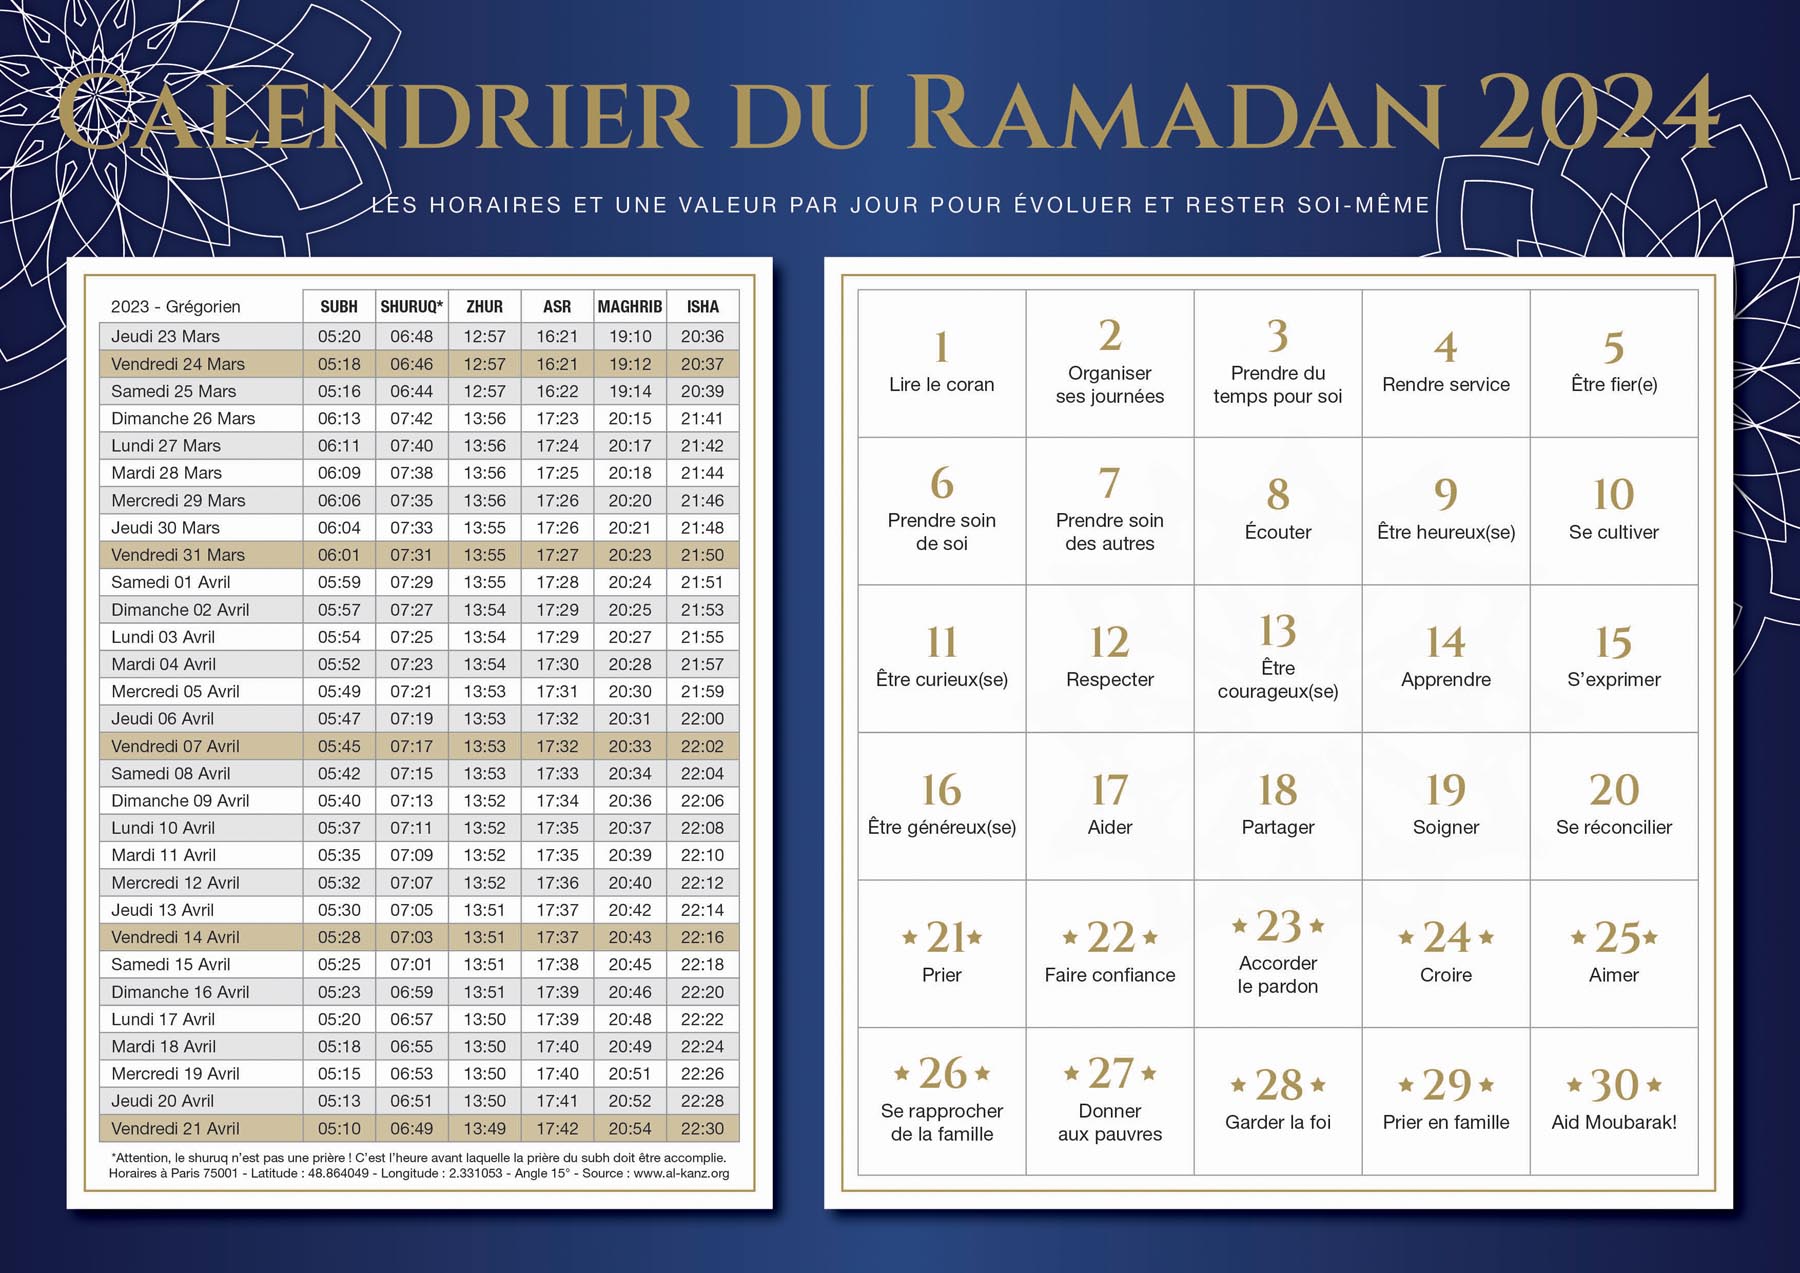 Calendrier ramadan personnalise  Calendriers ramadan publicitaires  personnalises